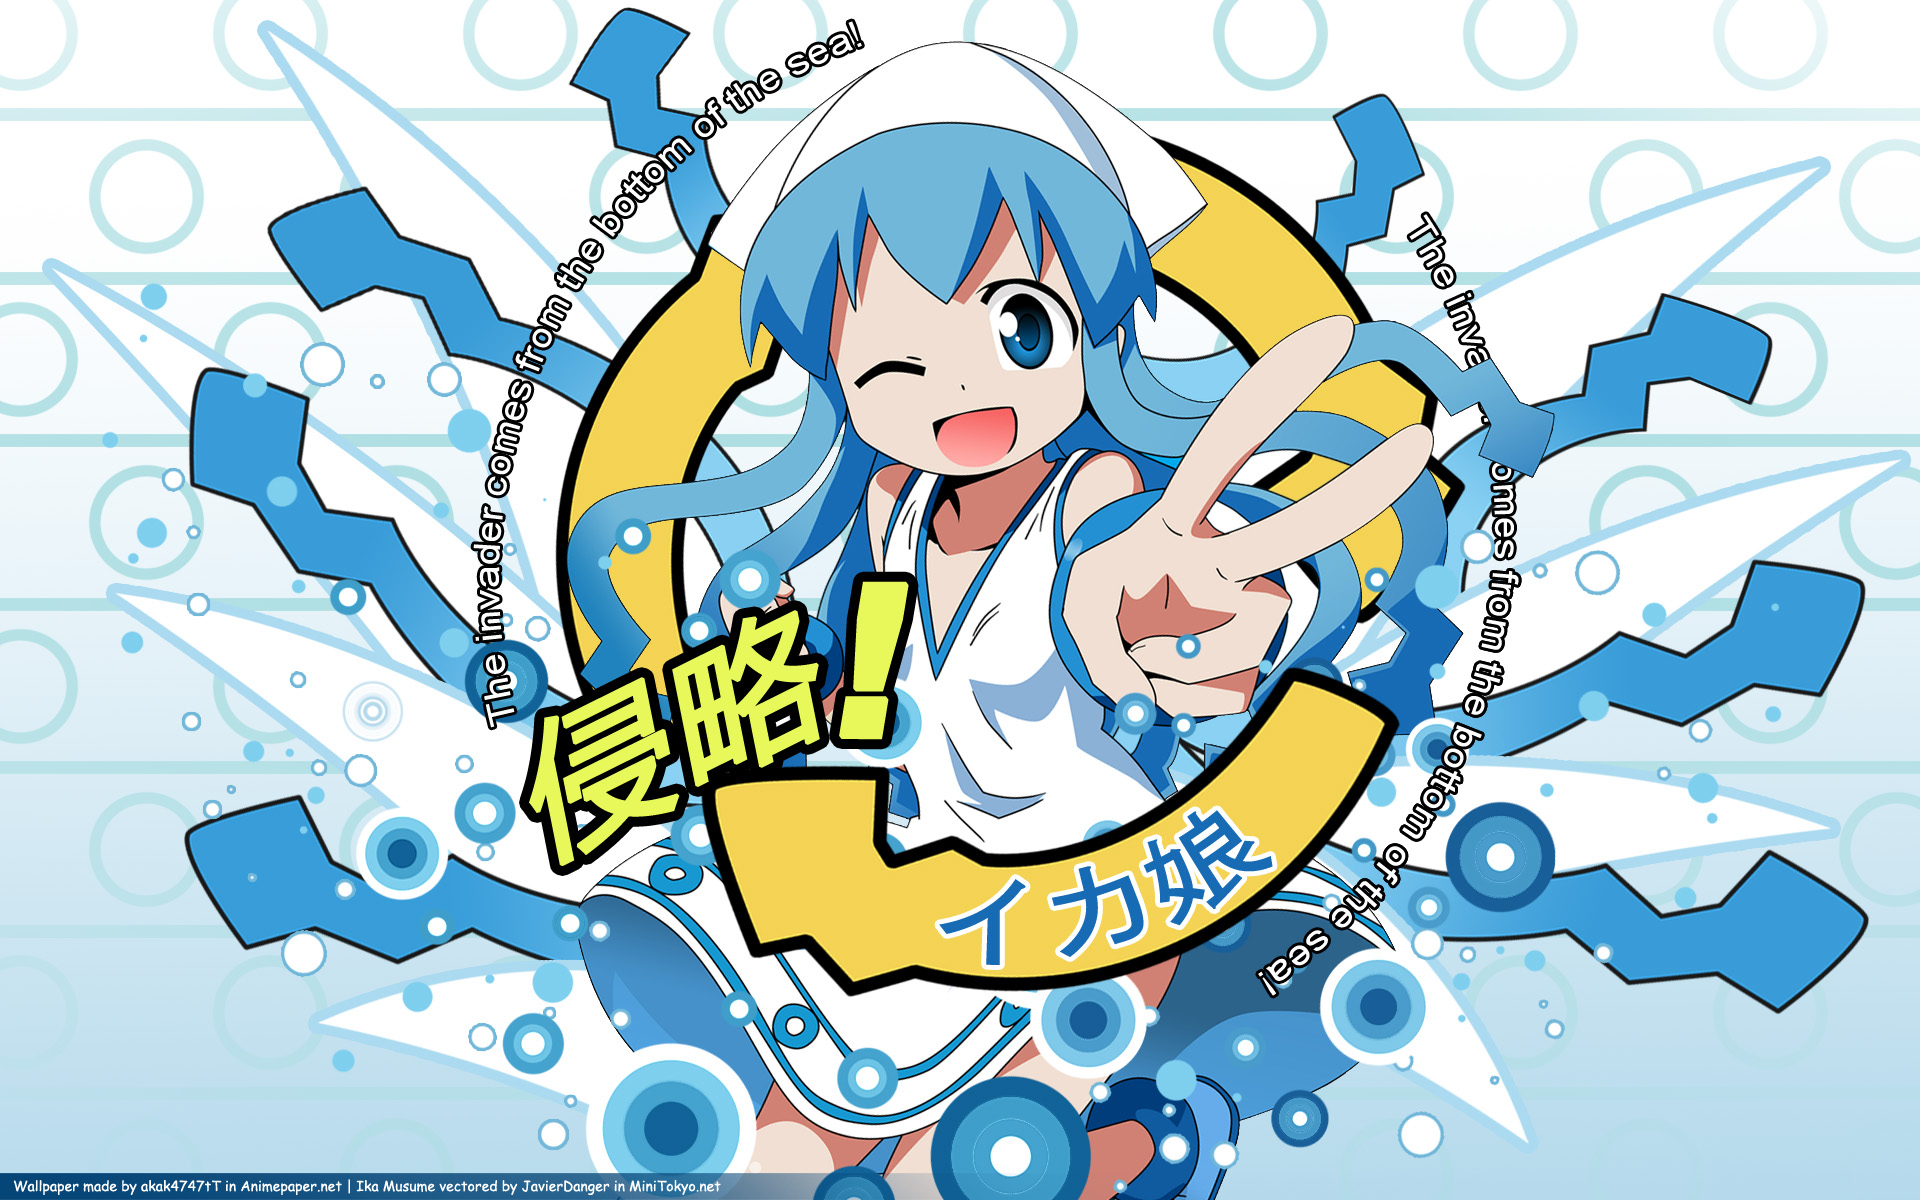 Shinryaku! Ika Musume Backgrounds, Compatible - PC, Mobile, Gadgets| 1920x1200 px